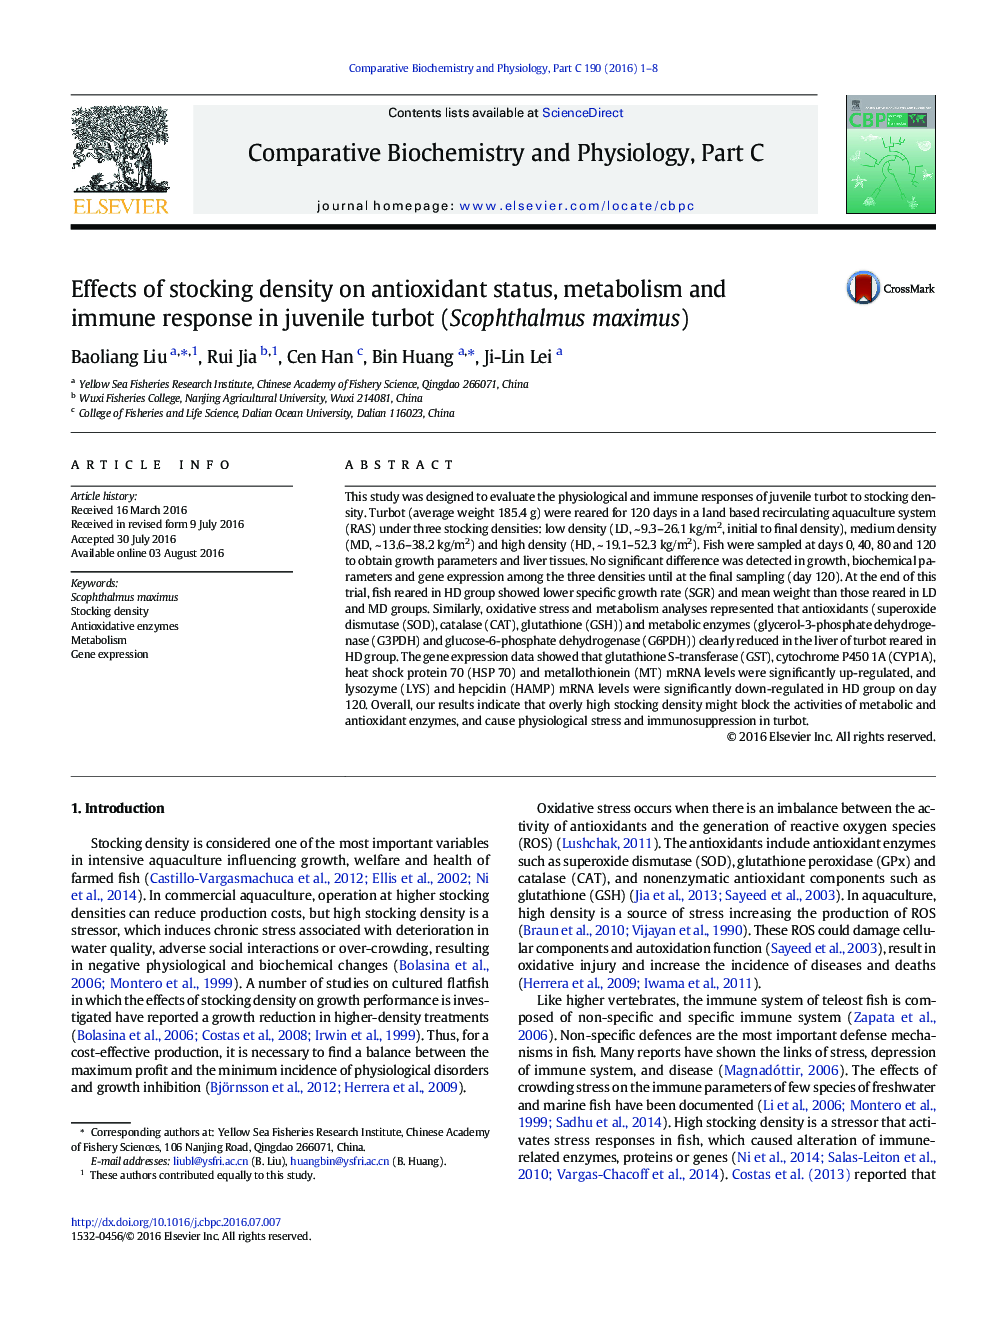 Effects of stocking density on antioxidant status, metabolism and immune response in juvenile turbot (Scophthalmus maximus)